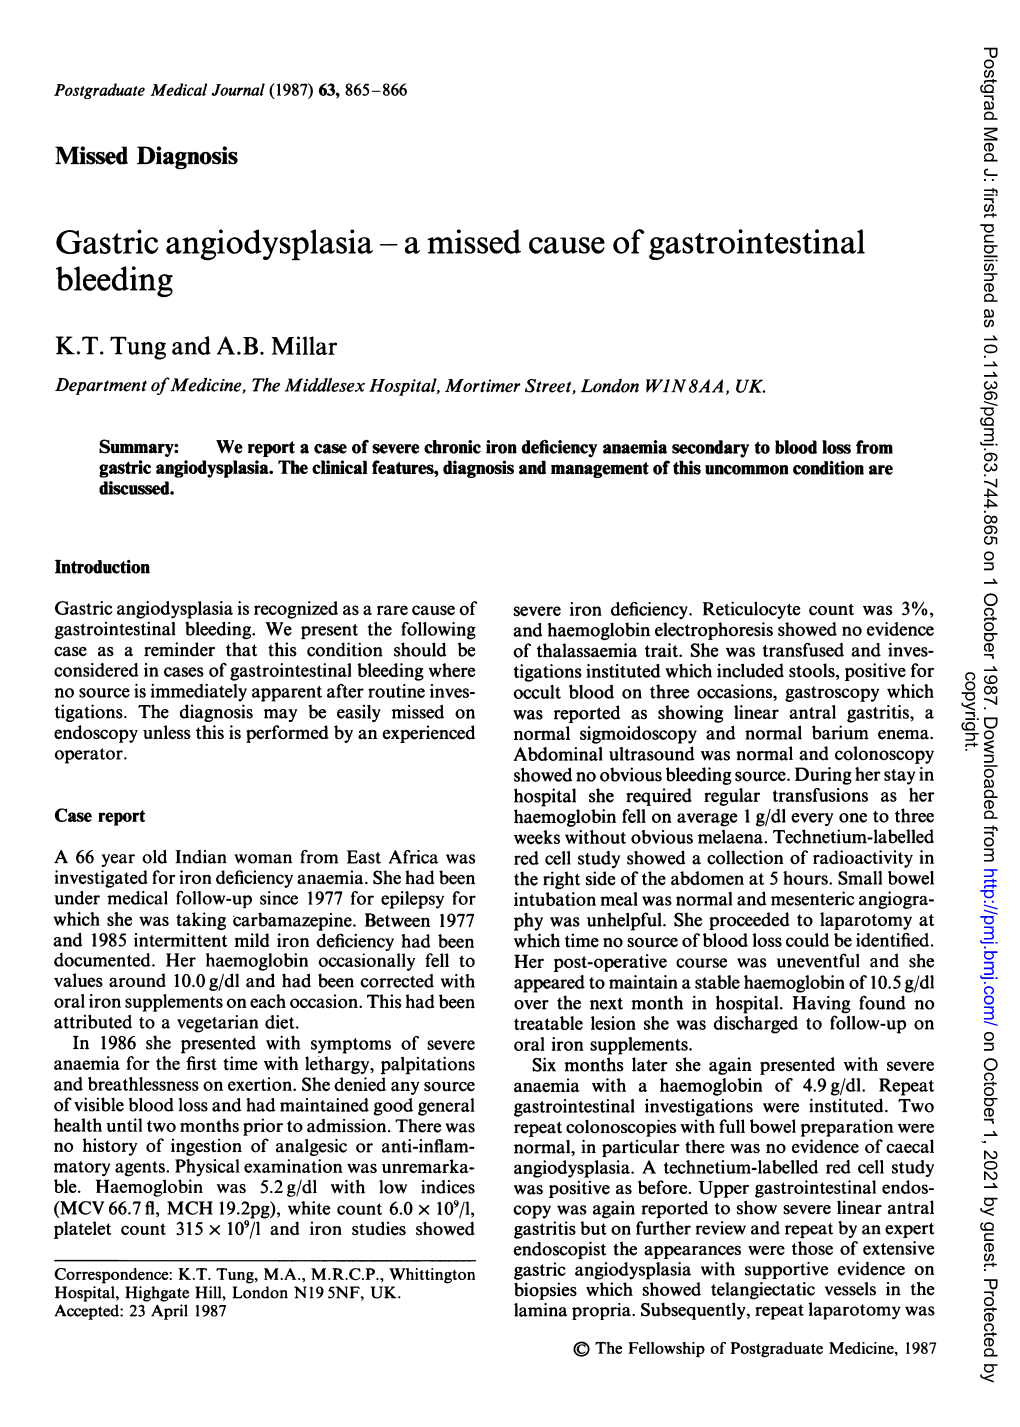 Gastric Angiodysplasia - a Missed Cause Ofgastrointestinal Bleeding